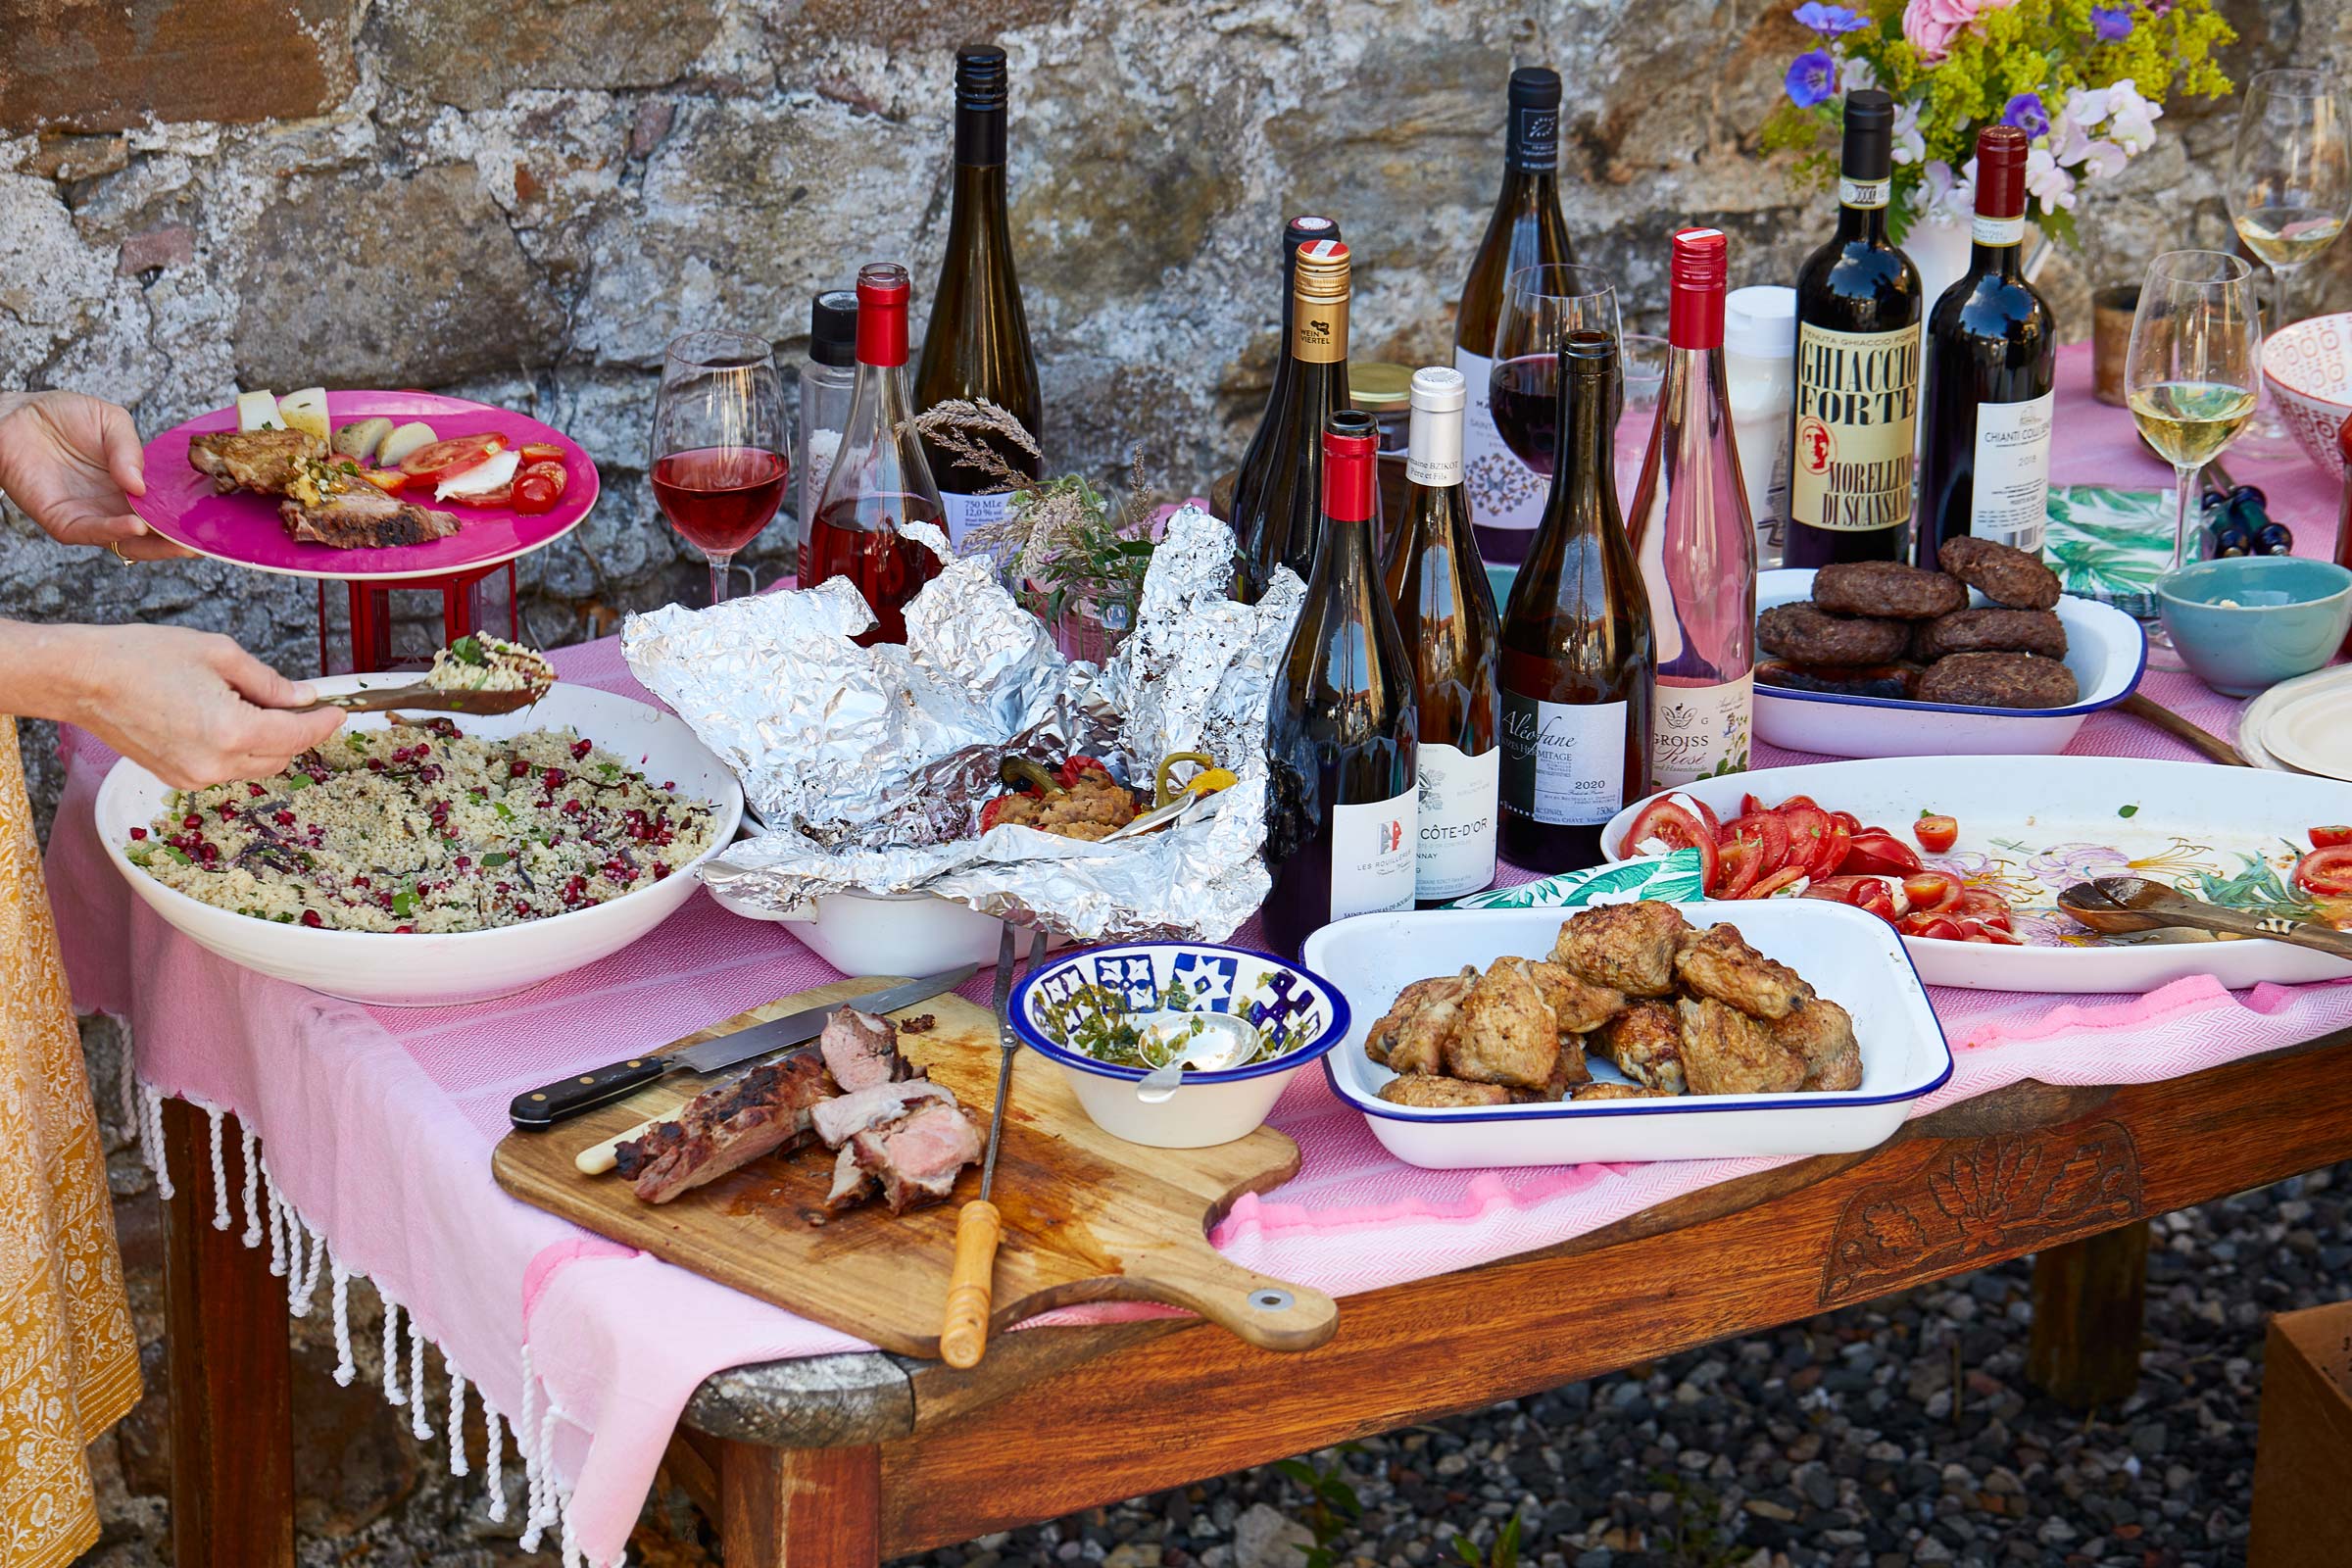 Summer BBQ Wines and Foods shot for De Burgh Wine Merchants, Alastair Ferrier food & drink photographer.